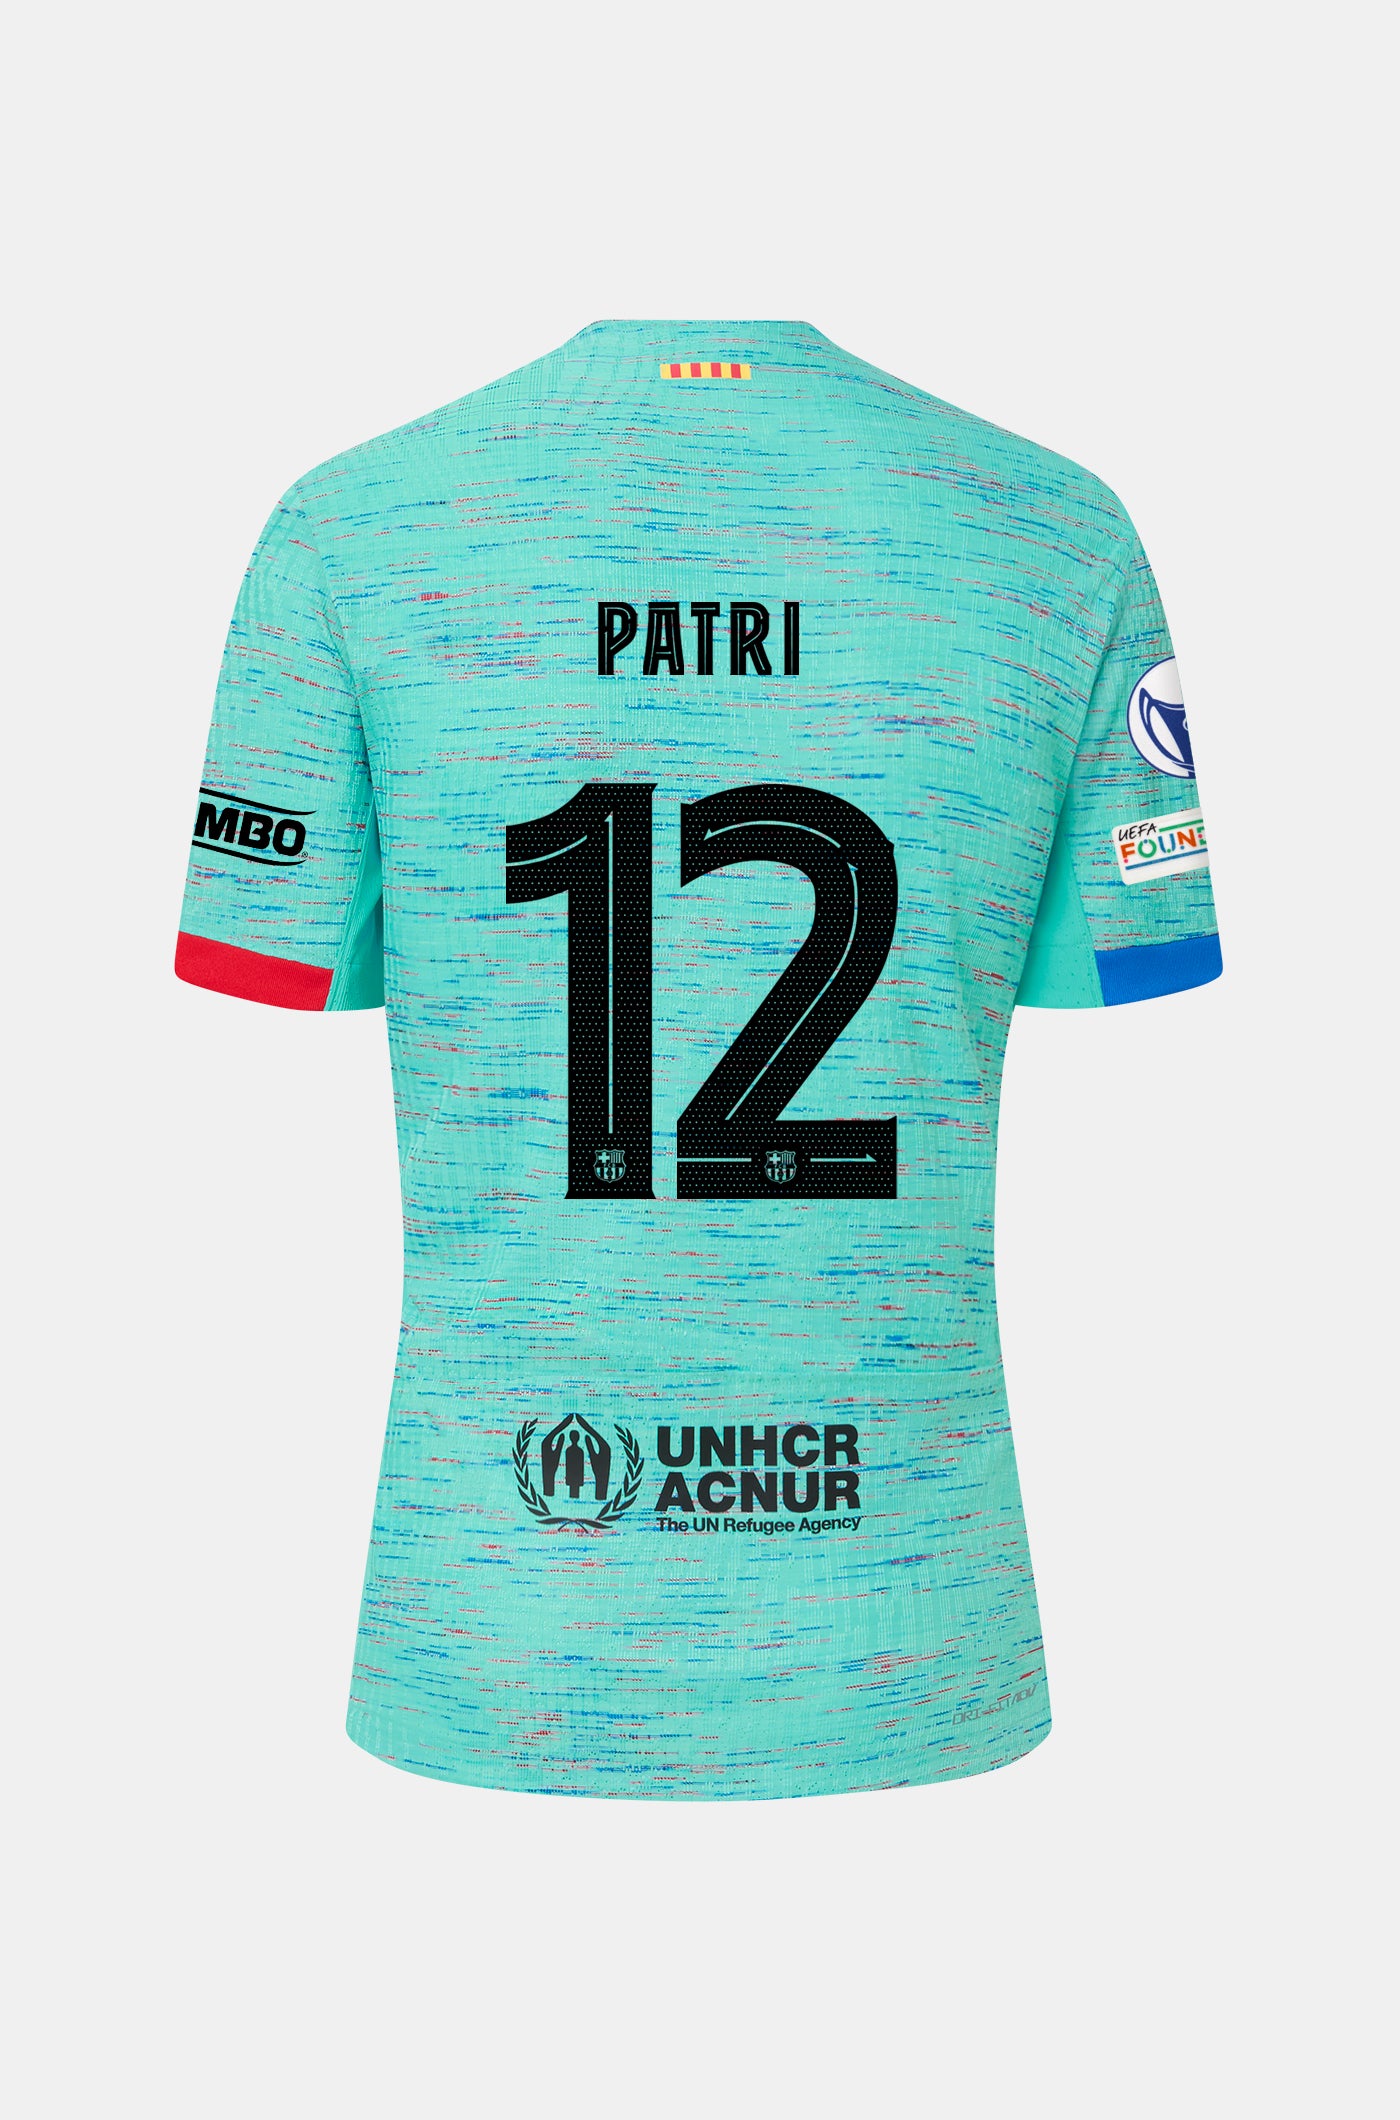 UWCL FC Barcelona third shirt 23/24 Player's Edition - PATRI